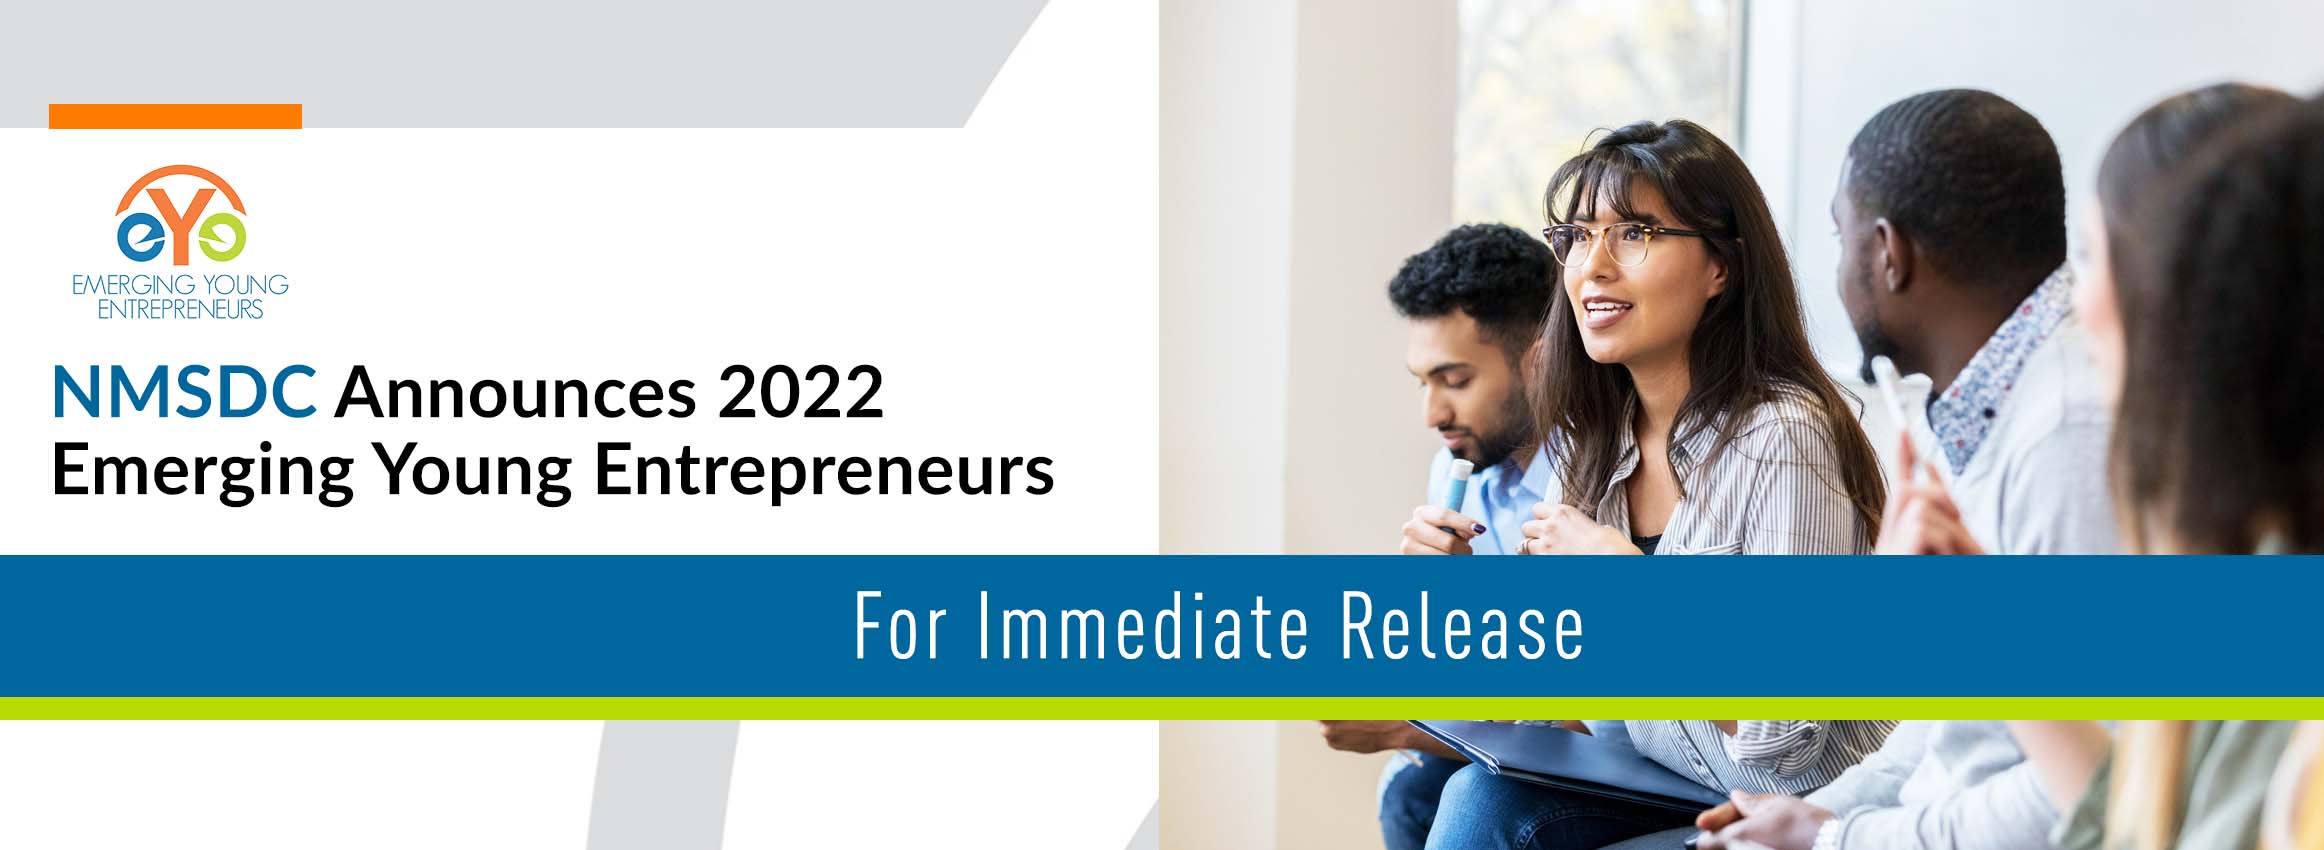 NMSDC Announces 2022 Emerging Young Entrepreneurs